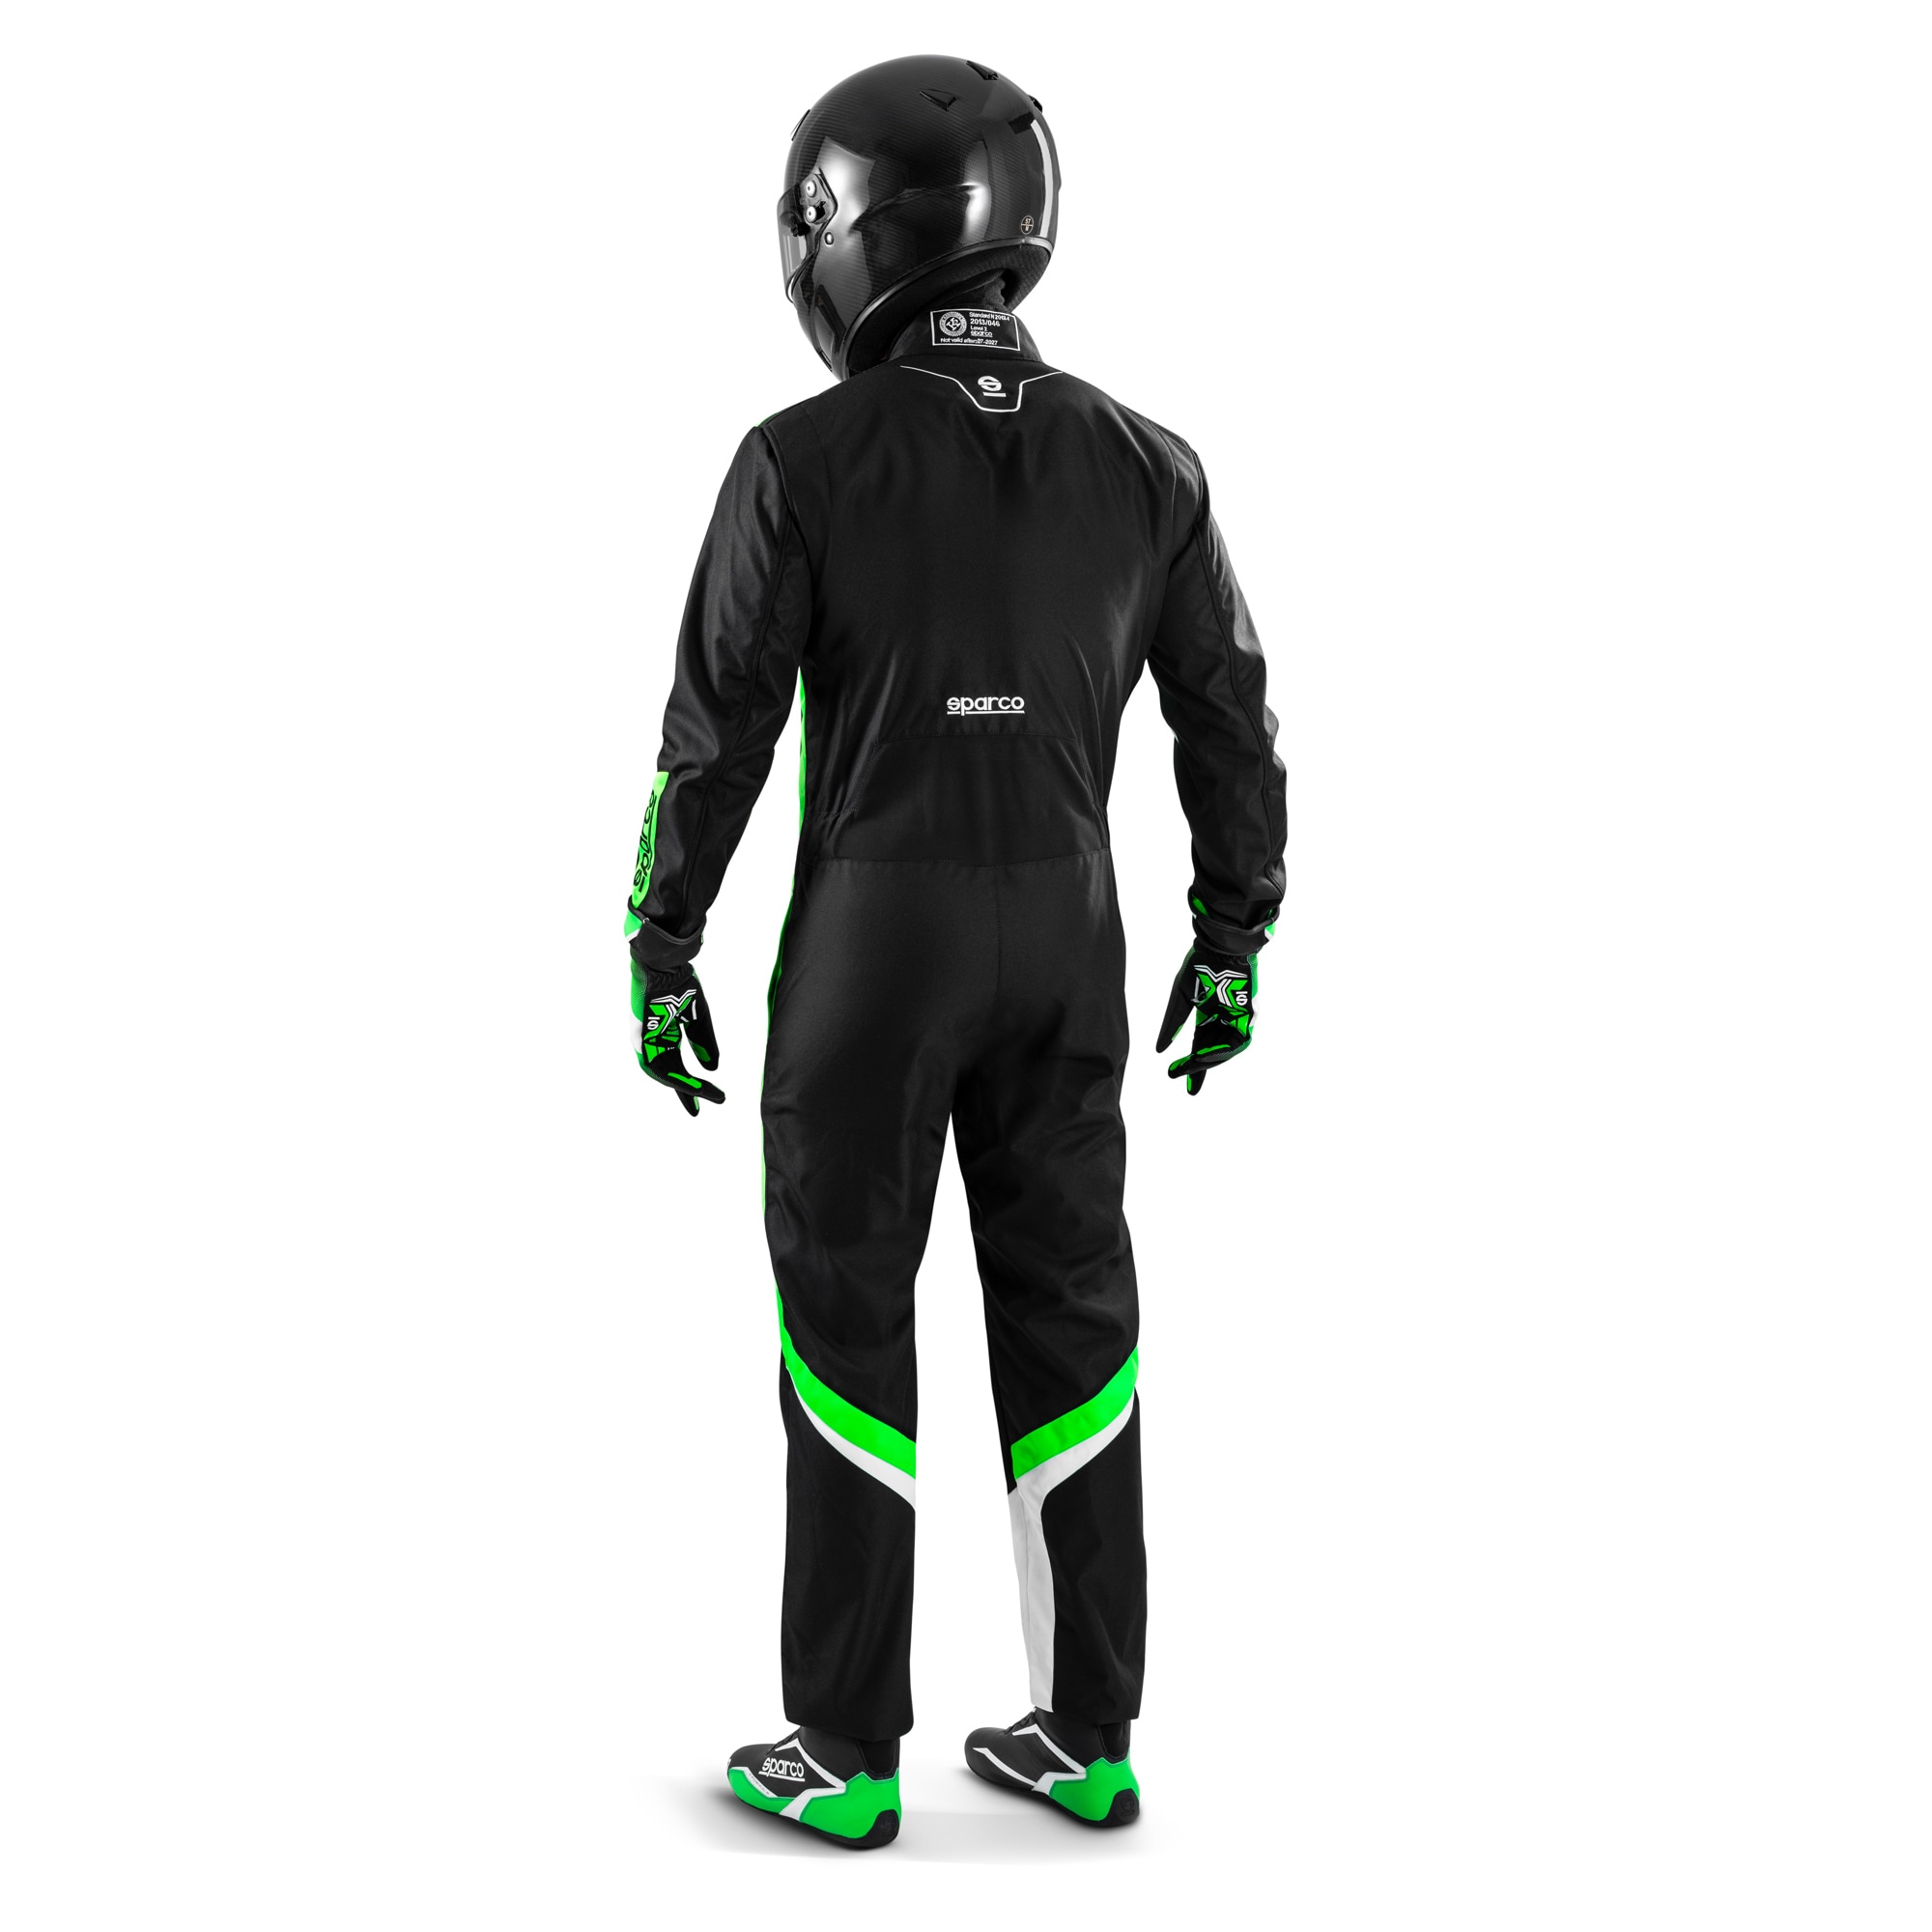 Karting suit Sparco Thunder Black/Green